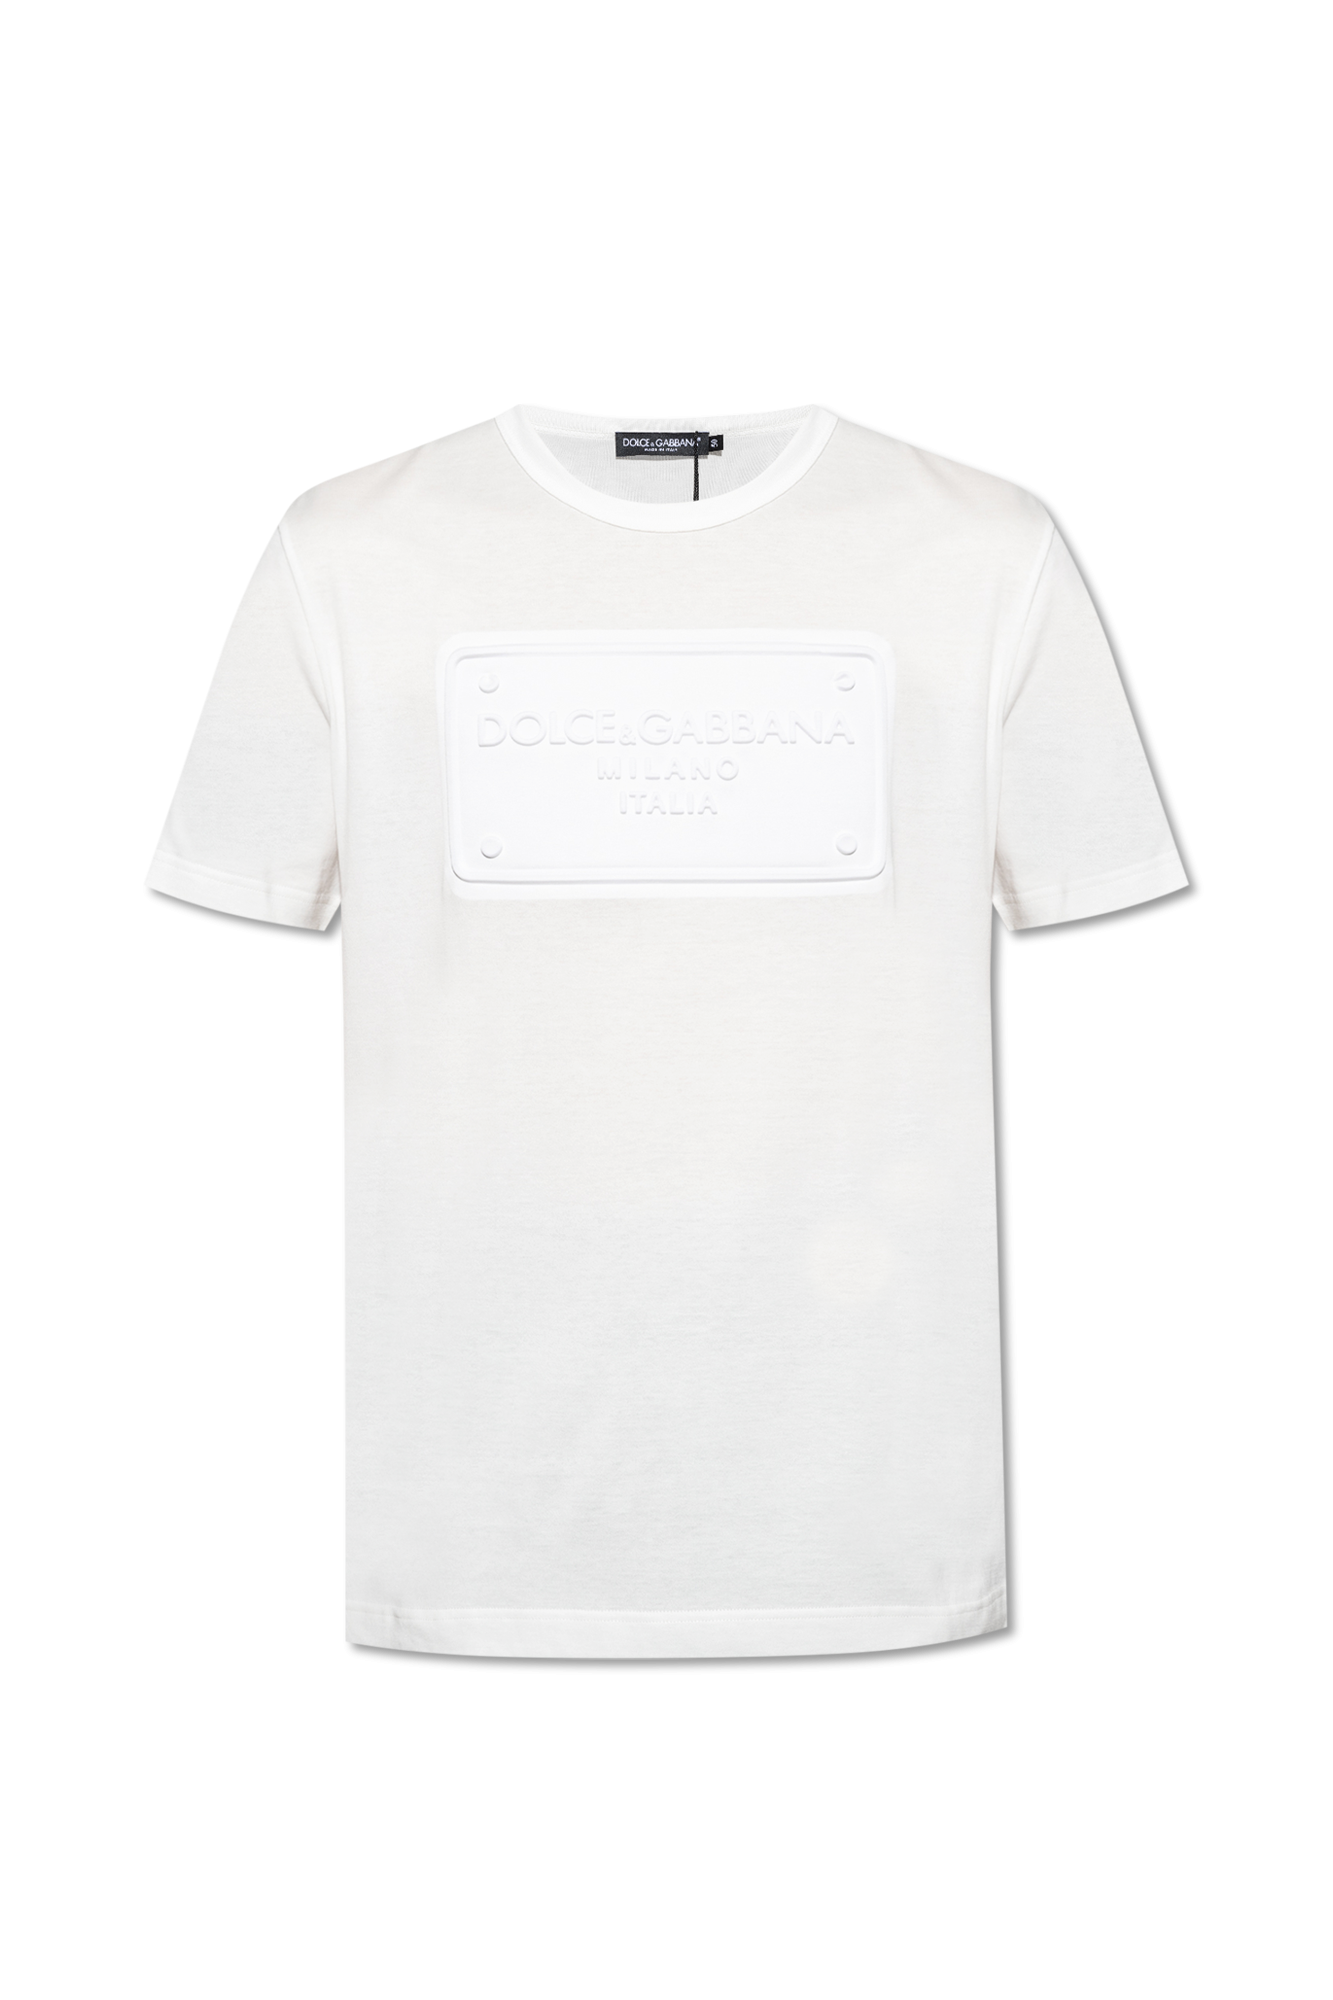 Dolce & Gabbana Cotton T-shirt with logo, Men's Clothing